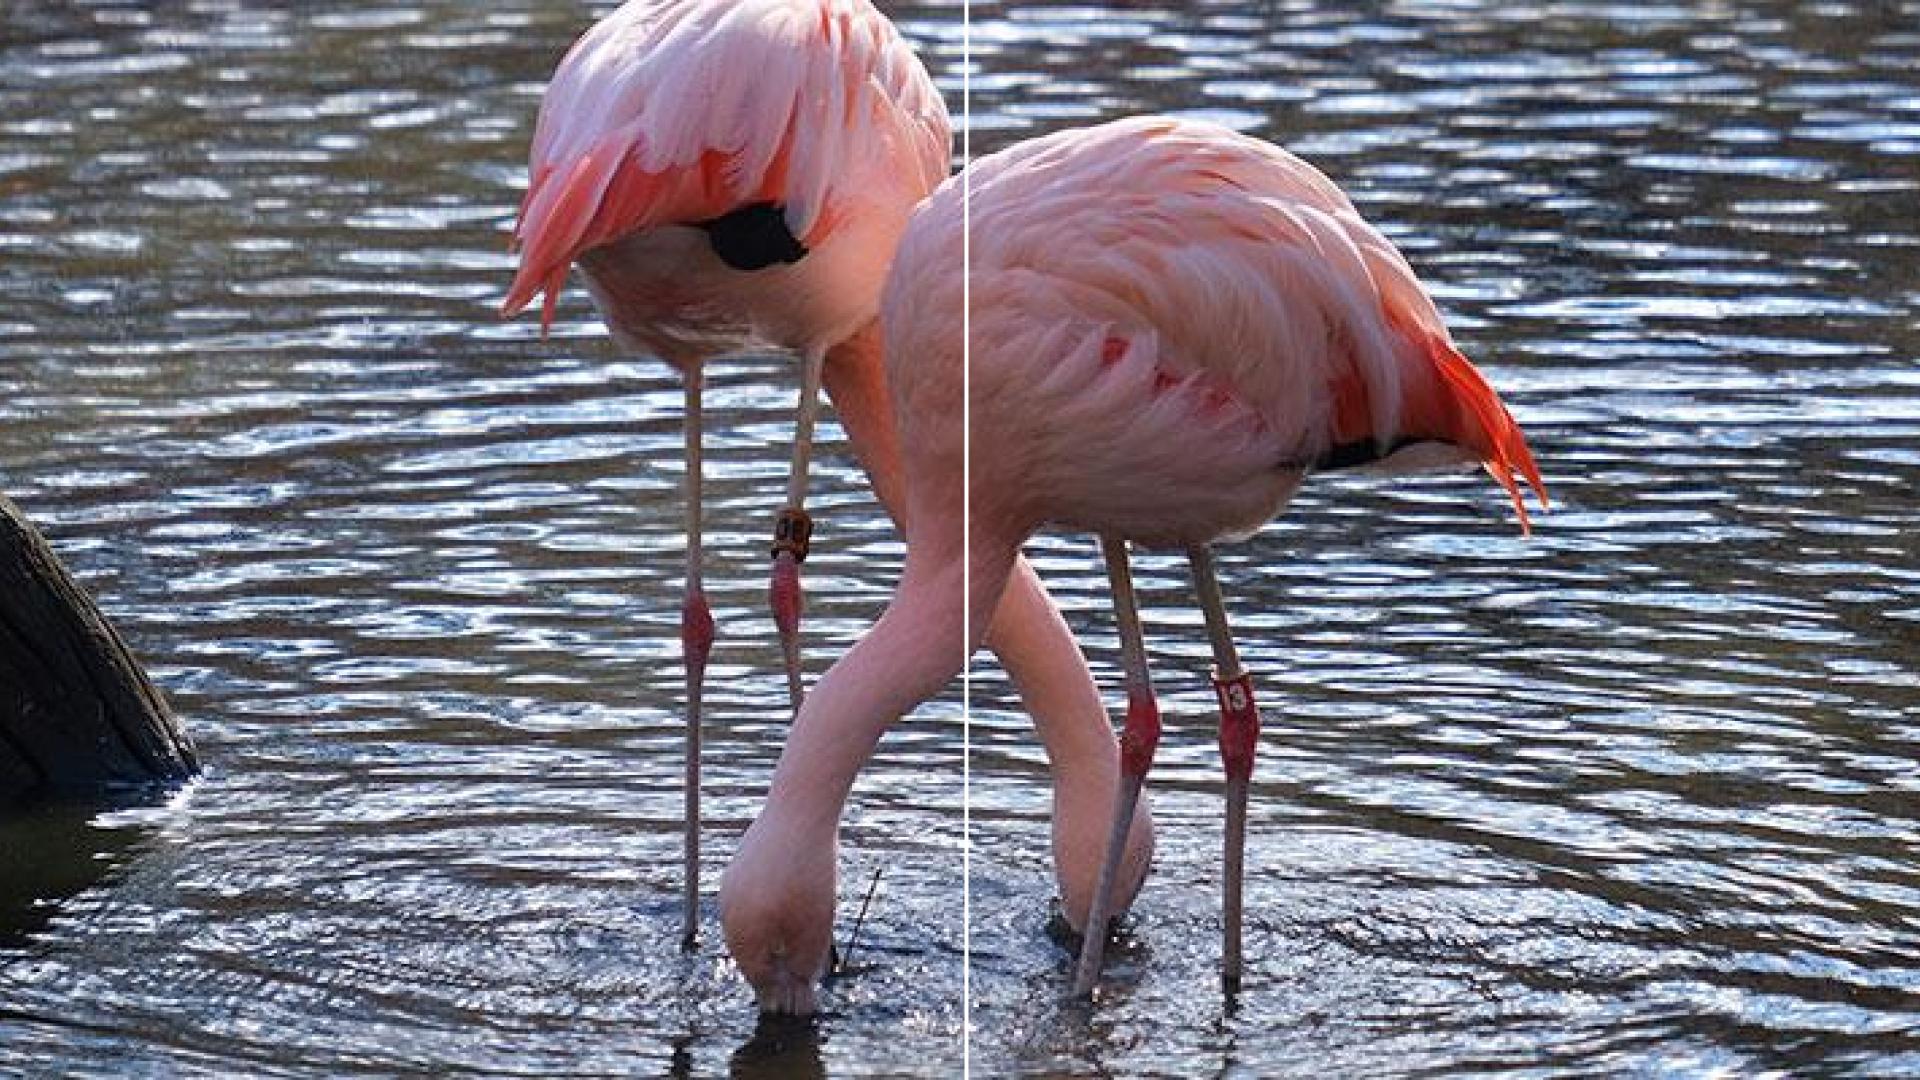 Louisville Zoo to celebrate International Flamingo Day on April 26